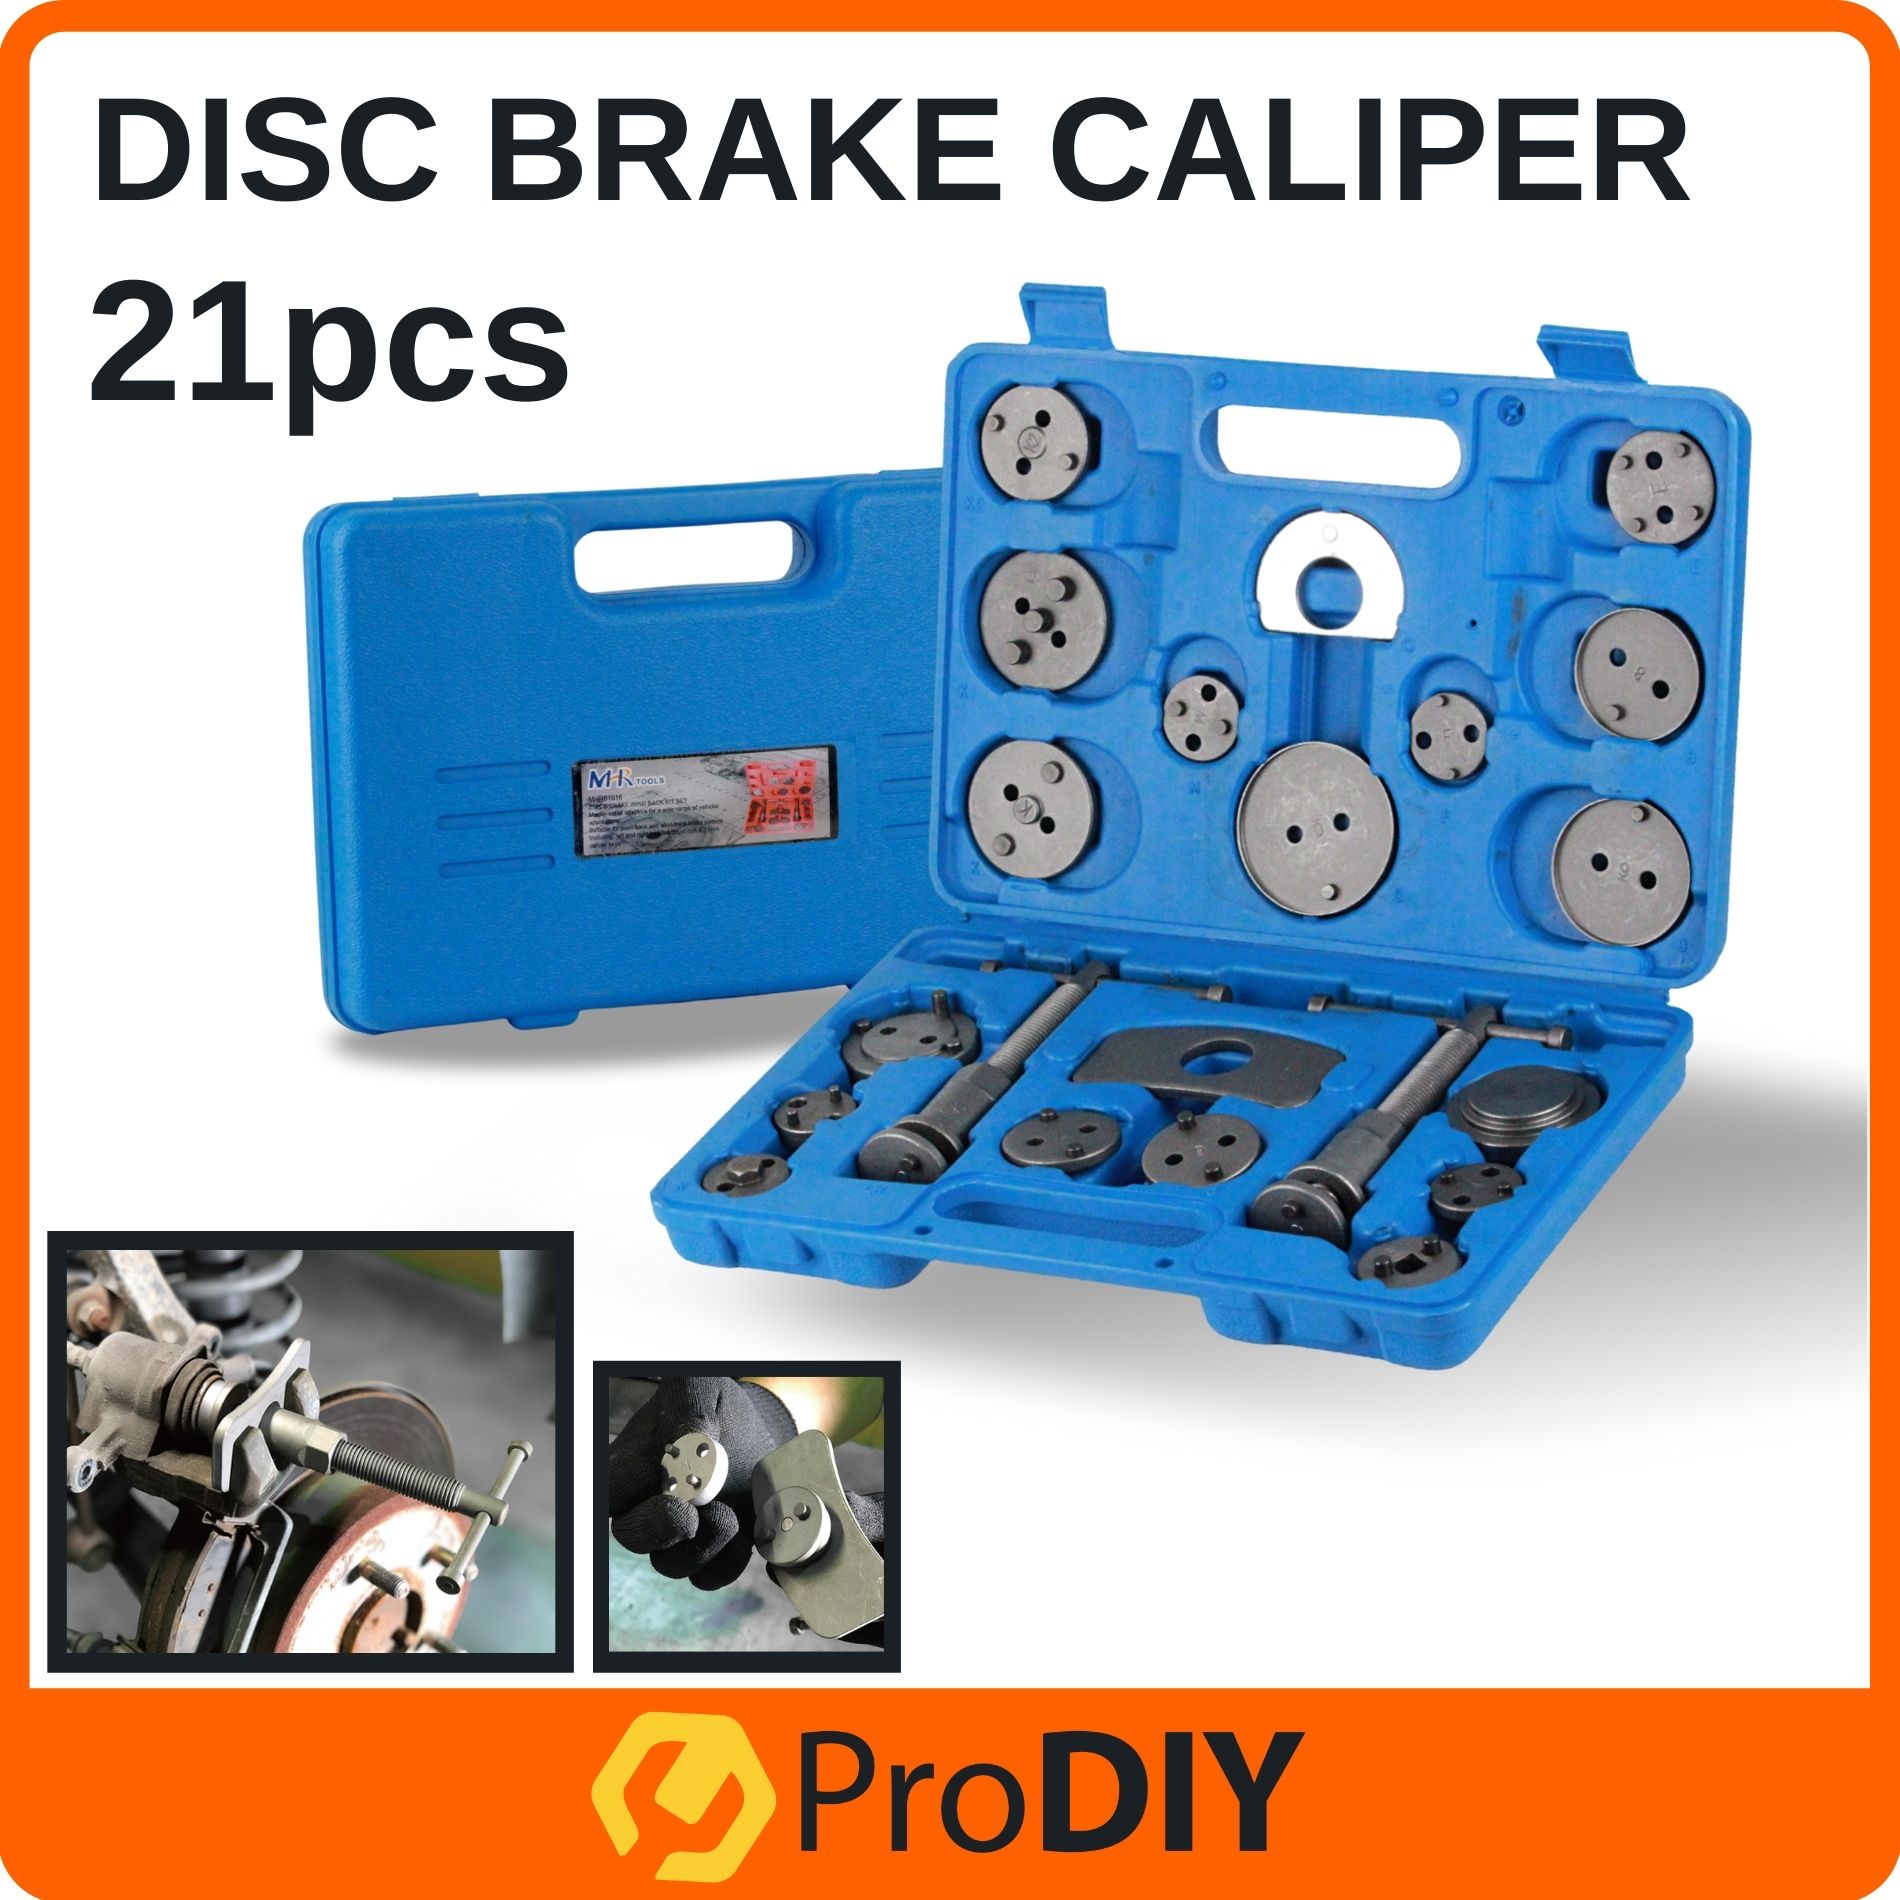 21pcs Universal Disc Brake Caliper Tool Kit Complete Set Vehicle Automotive Hardware Repair Alat Repair Brake